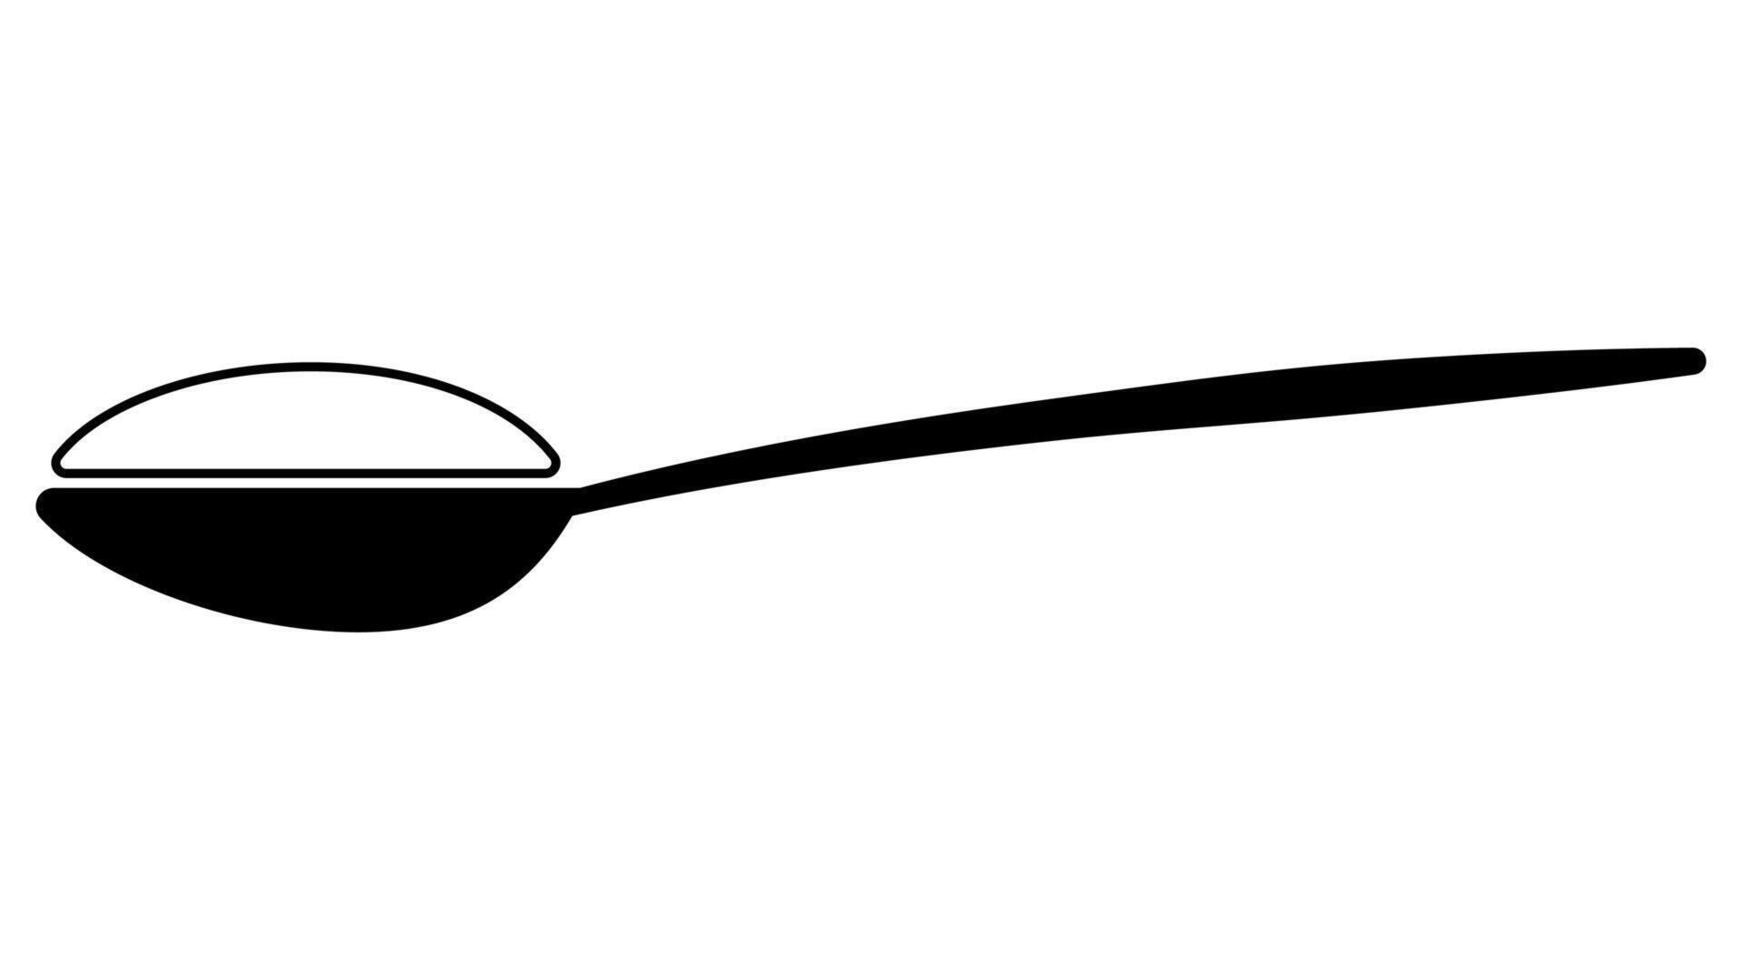 icona pieno cucchiaio con diapositiva, cartello cucinando cucina pieno cucchiaio vettore